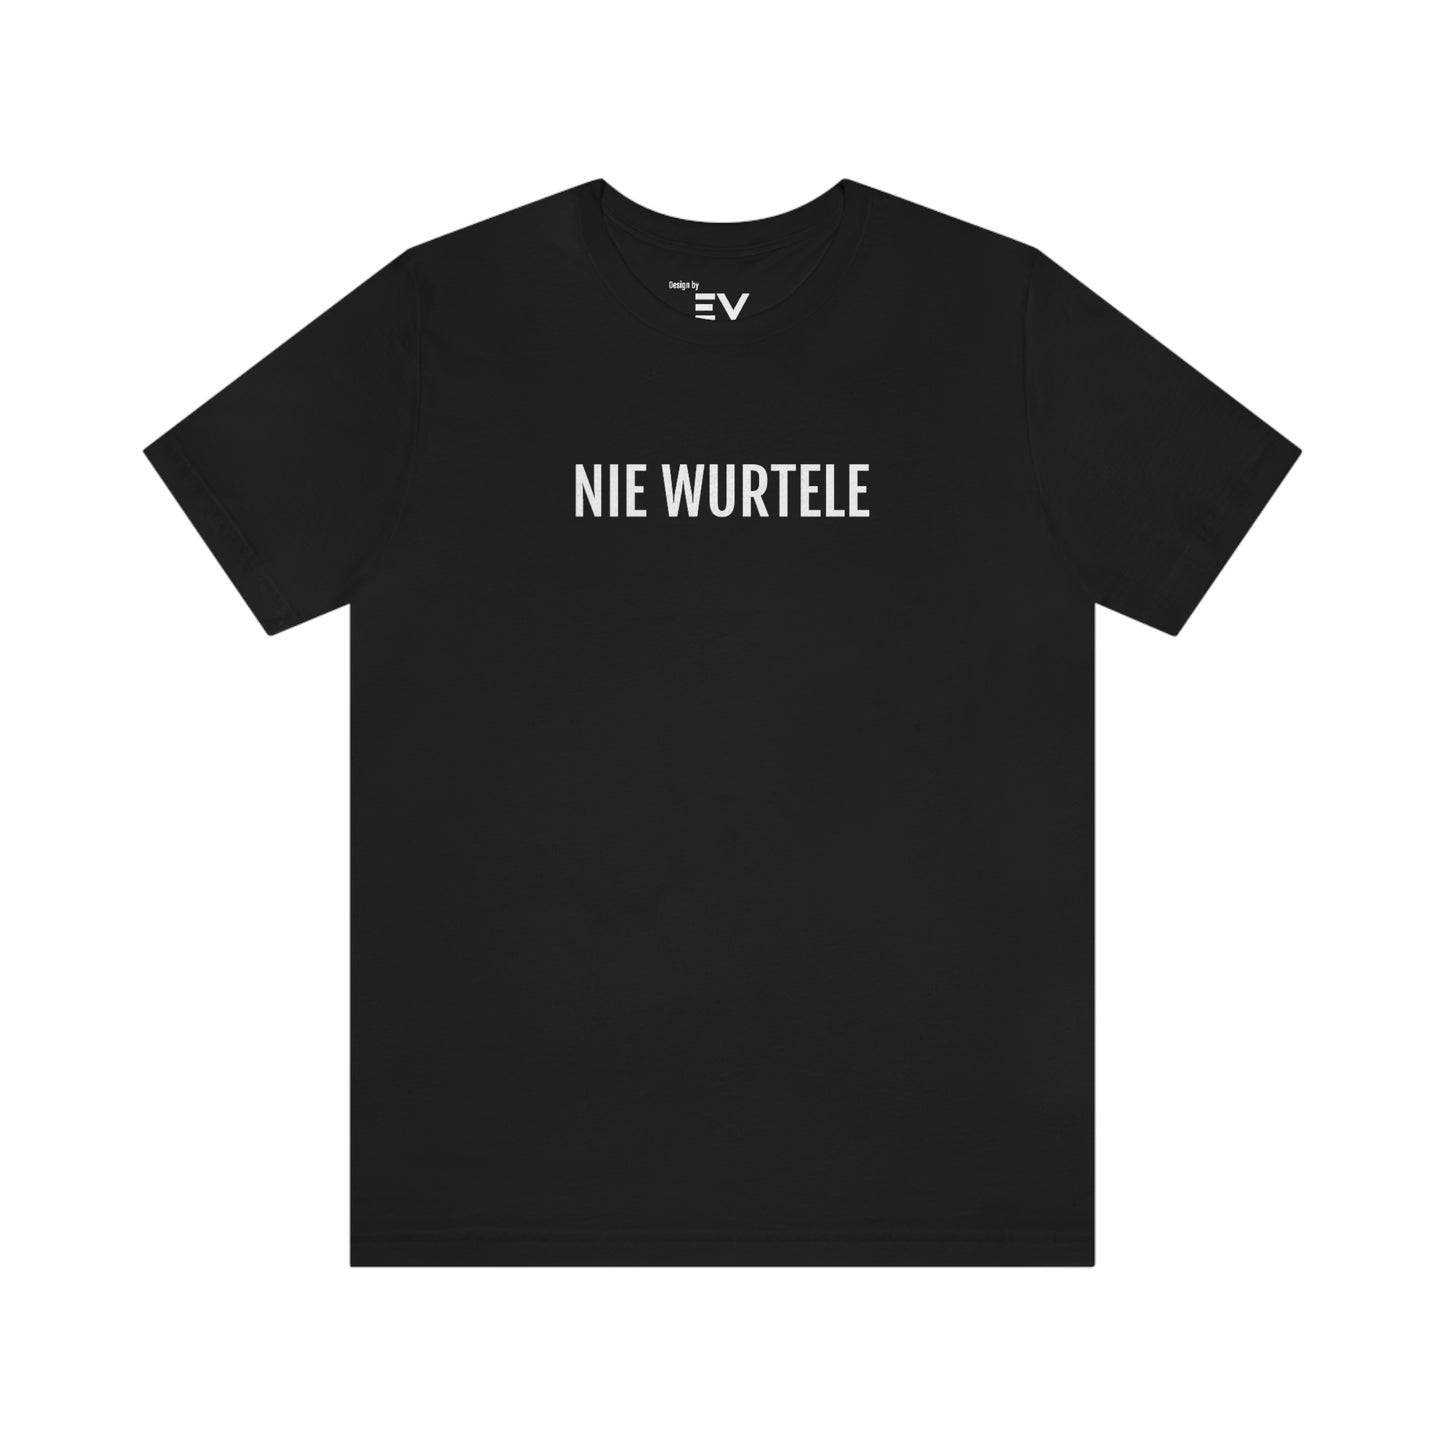 NIE WURTELE | Unisex T-Shirt uit Oost-Vlaanderen